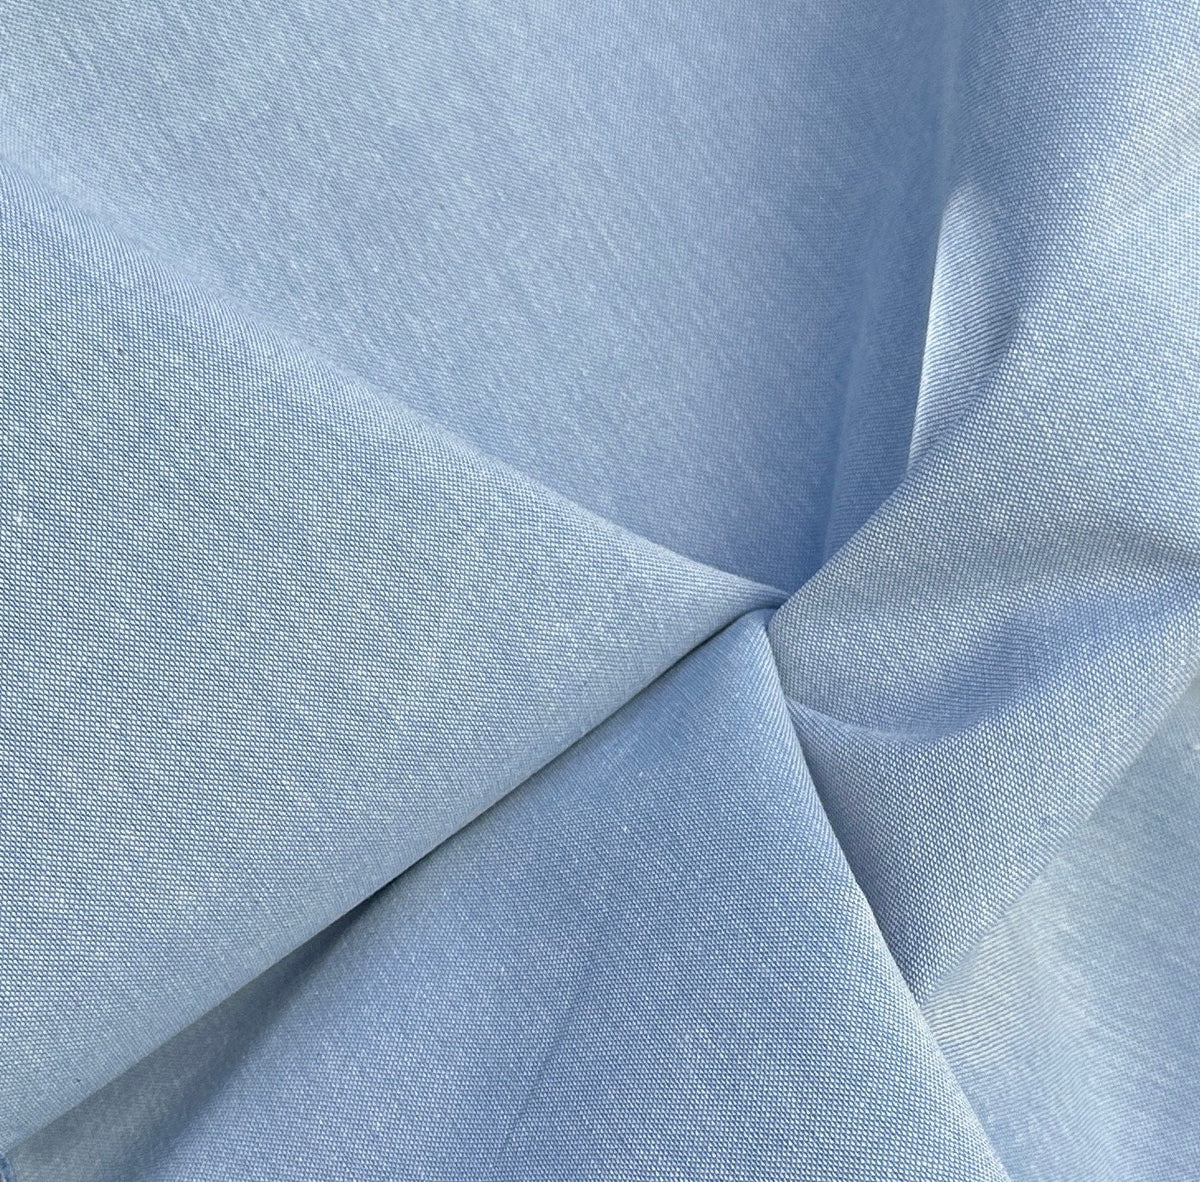 Chambray Cotton Blend Fabric - Light Blue